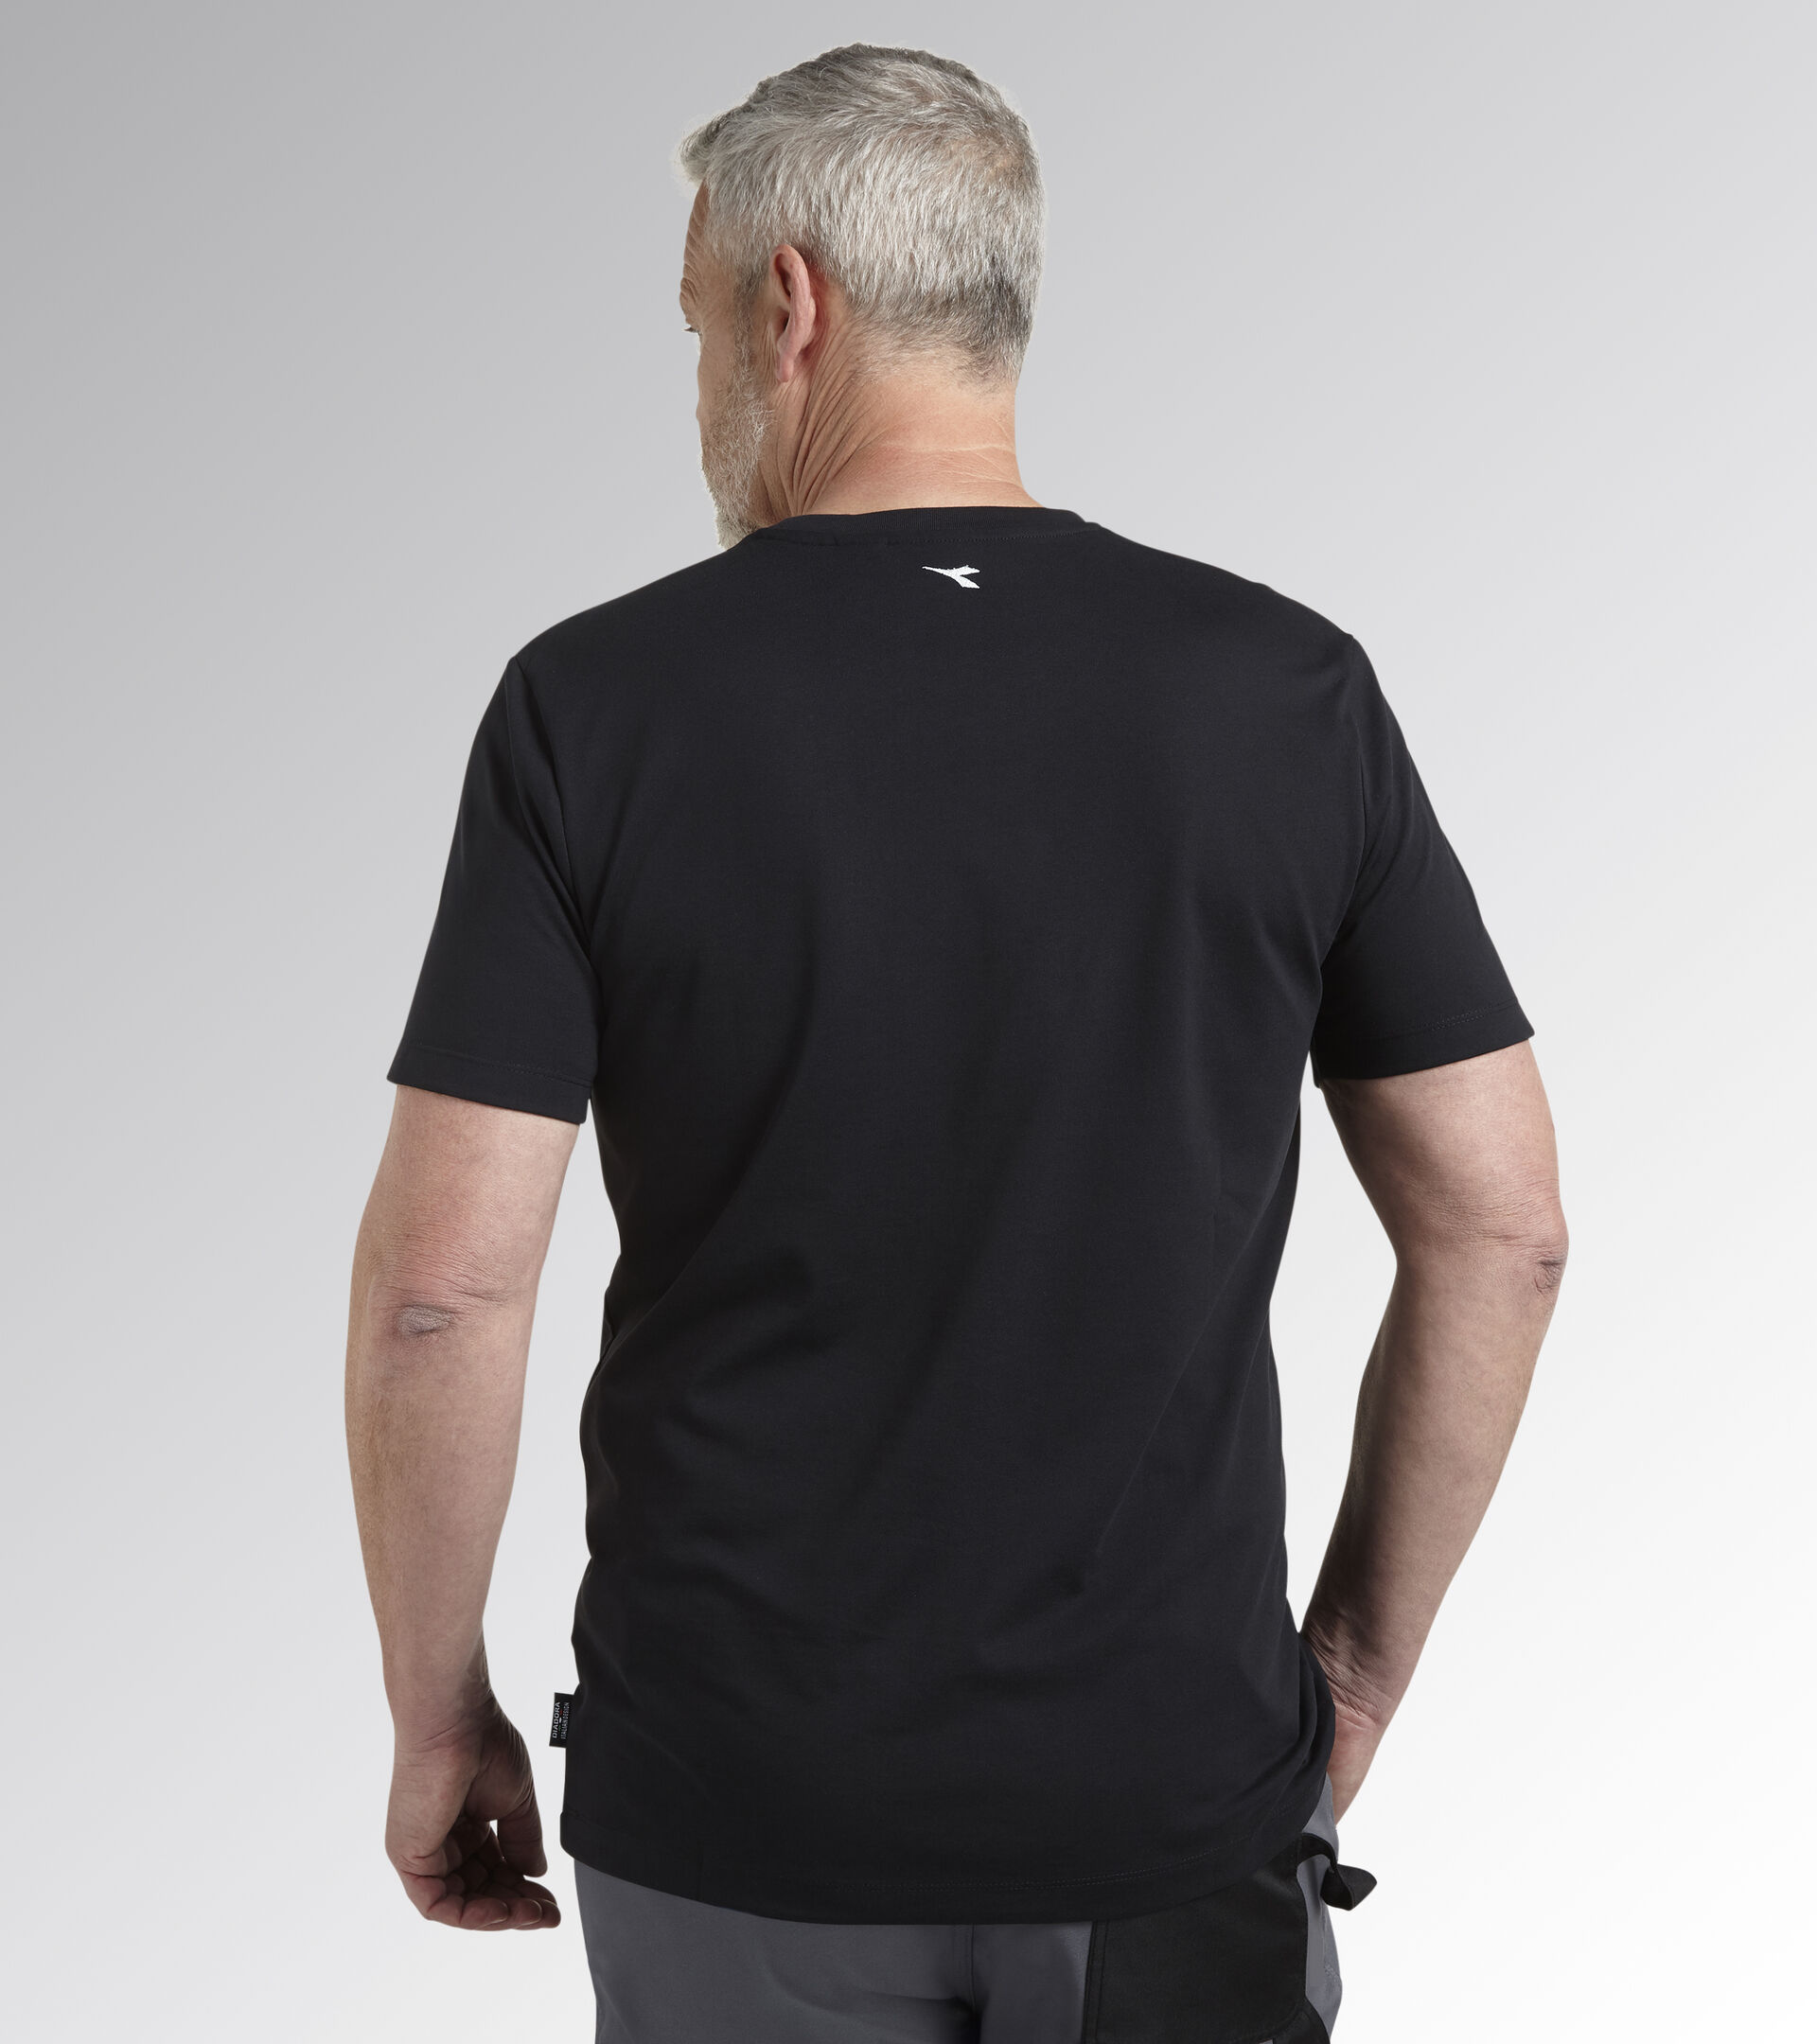 Work T-shirt T-SHIRT INDUSTRY BLACK - Utility